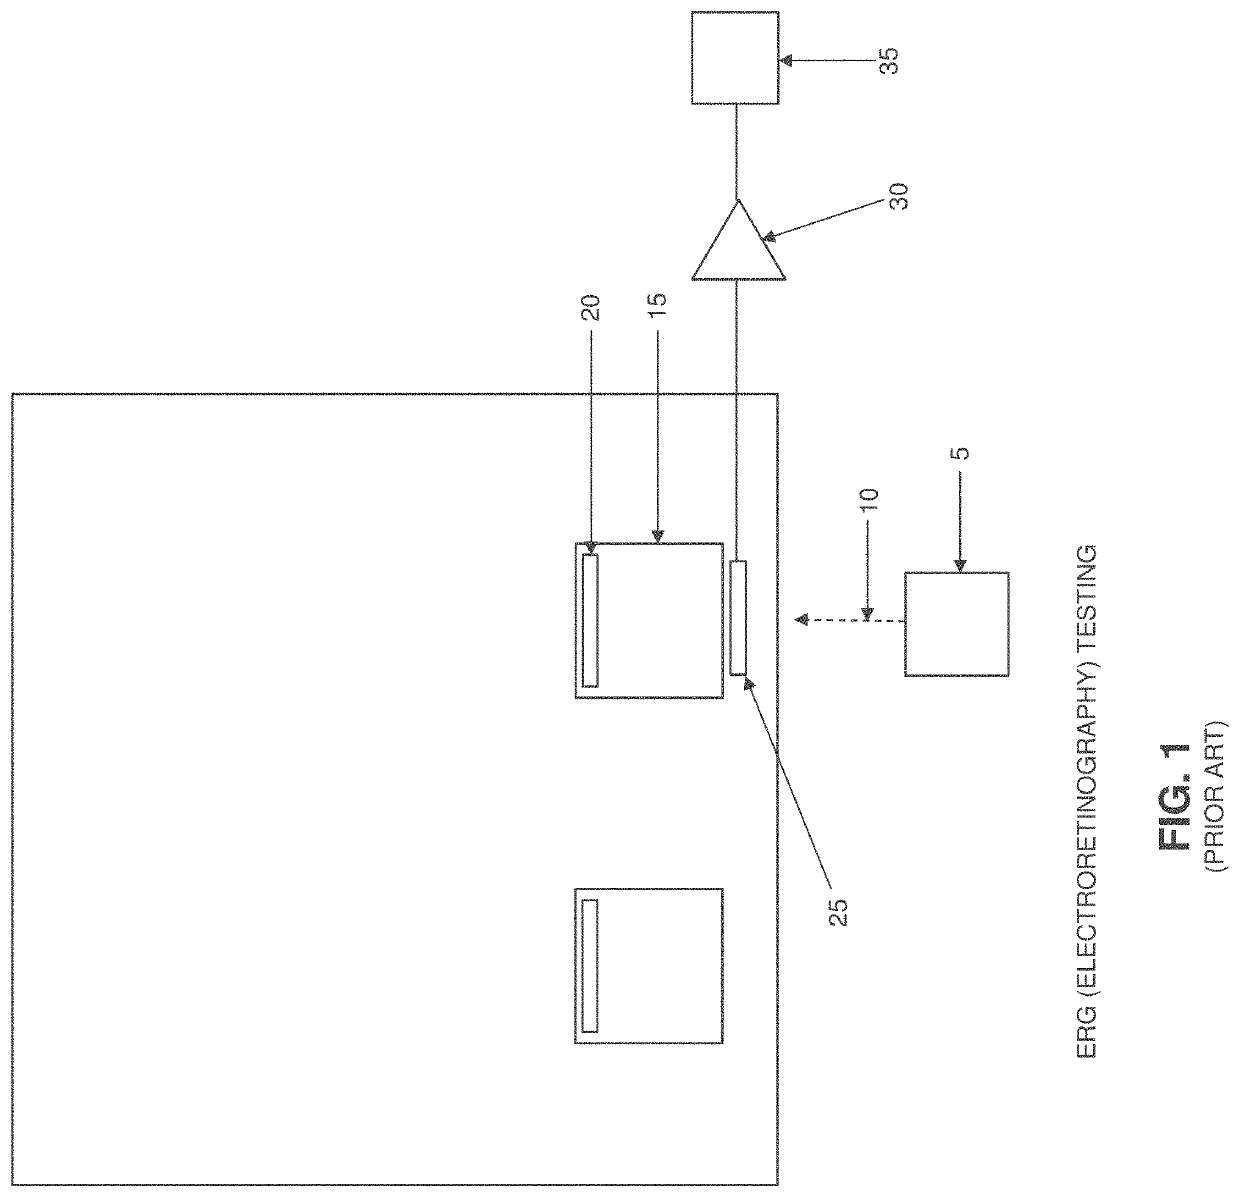 Novel electrically evoked response (EER) stimulator/amplifier combination